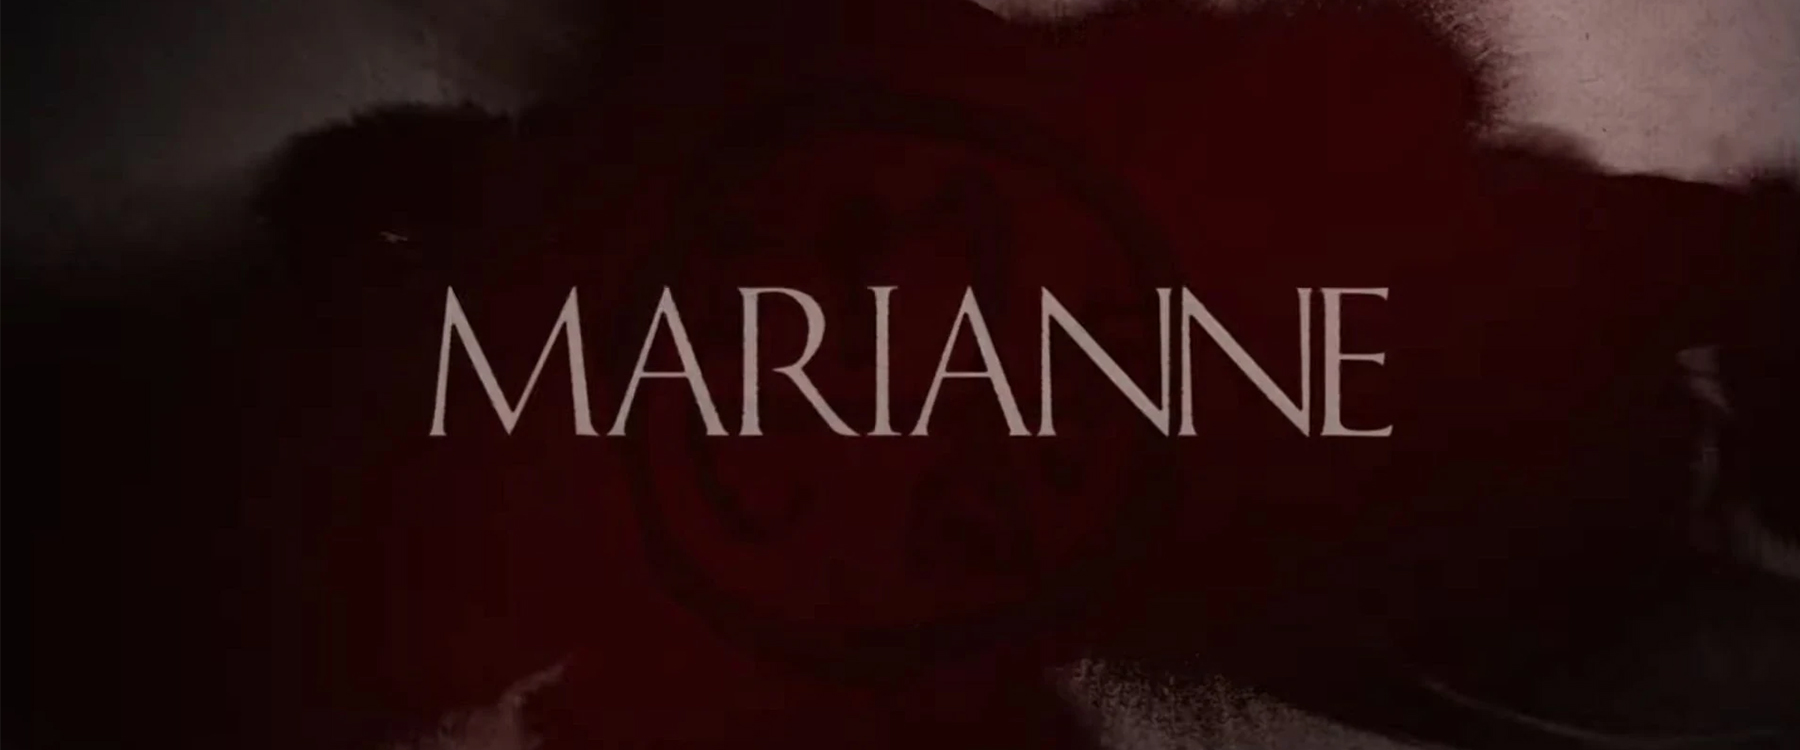 Marianne (Marianne)